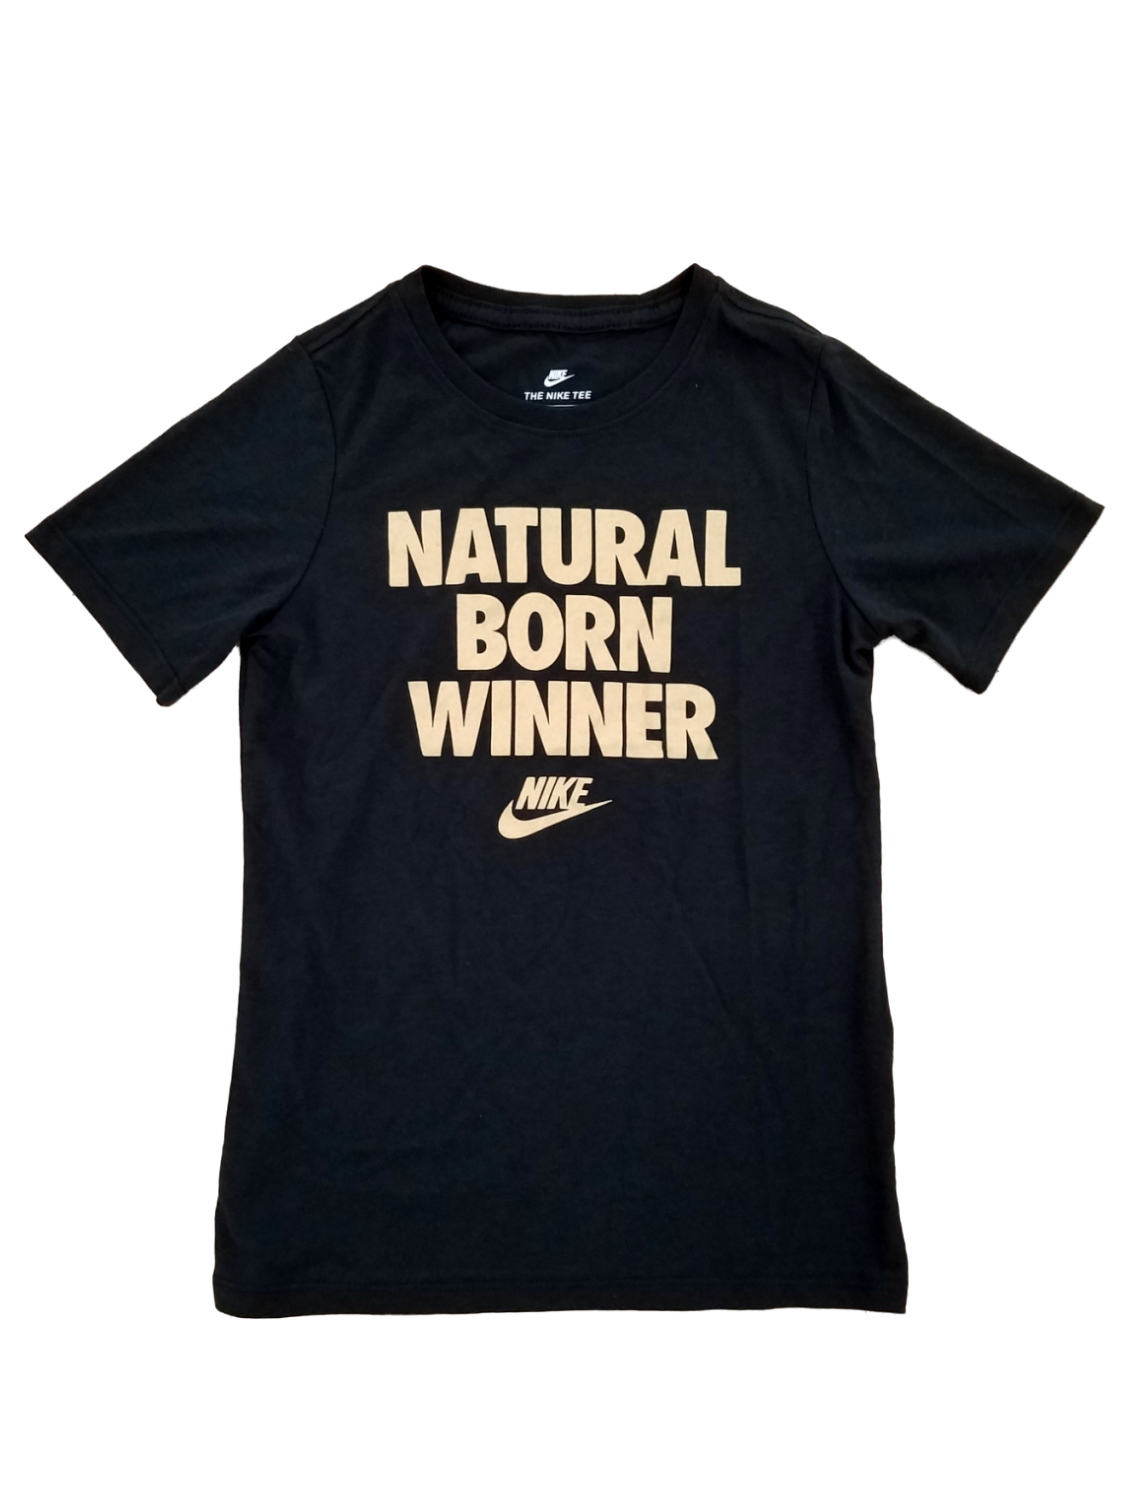 Nike Boys Black Natural Born Winner Graphic Tee Athletic Cut T-Shirt